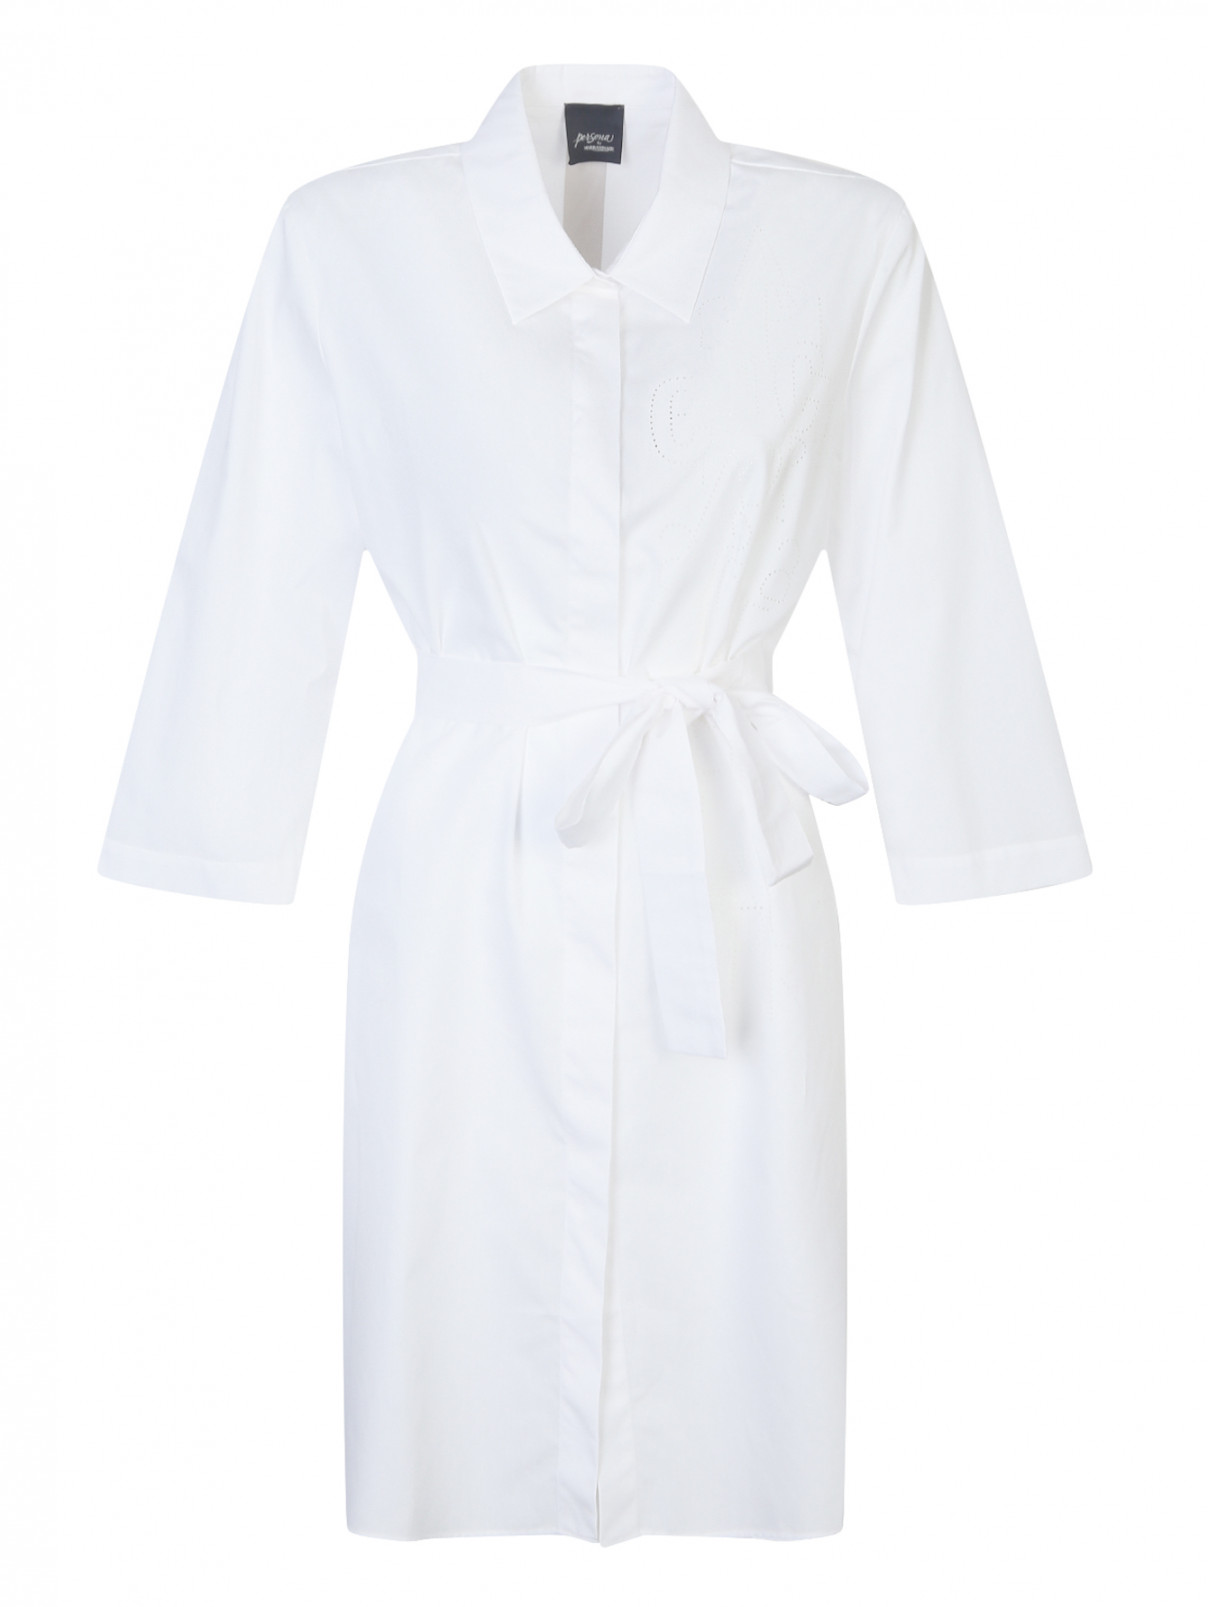 Платье-рубашка из хлопка с узором Persona by Marina Rinaldi  –  Общий вид  – Цвет:  Белый